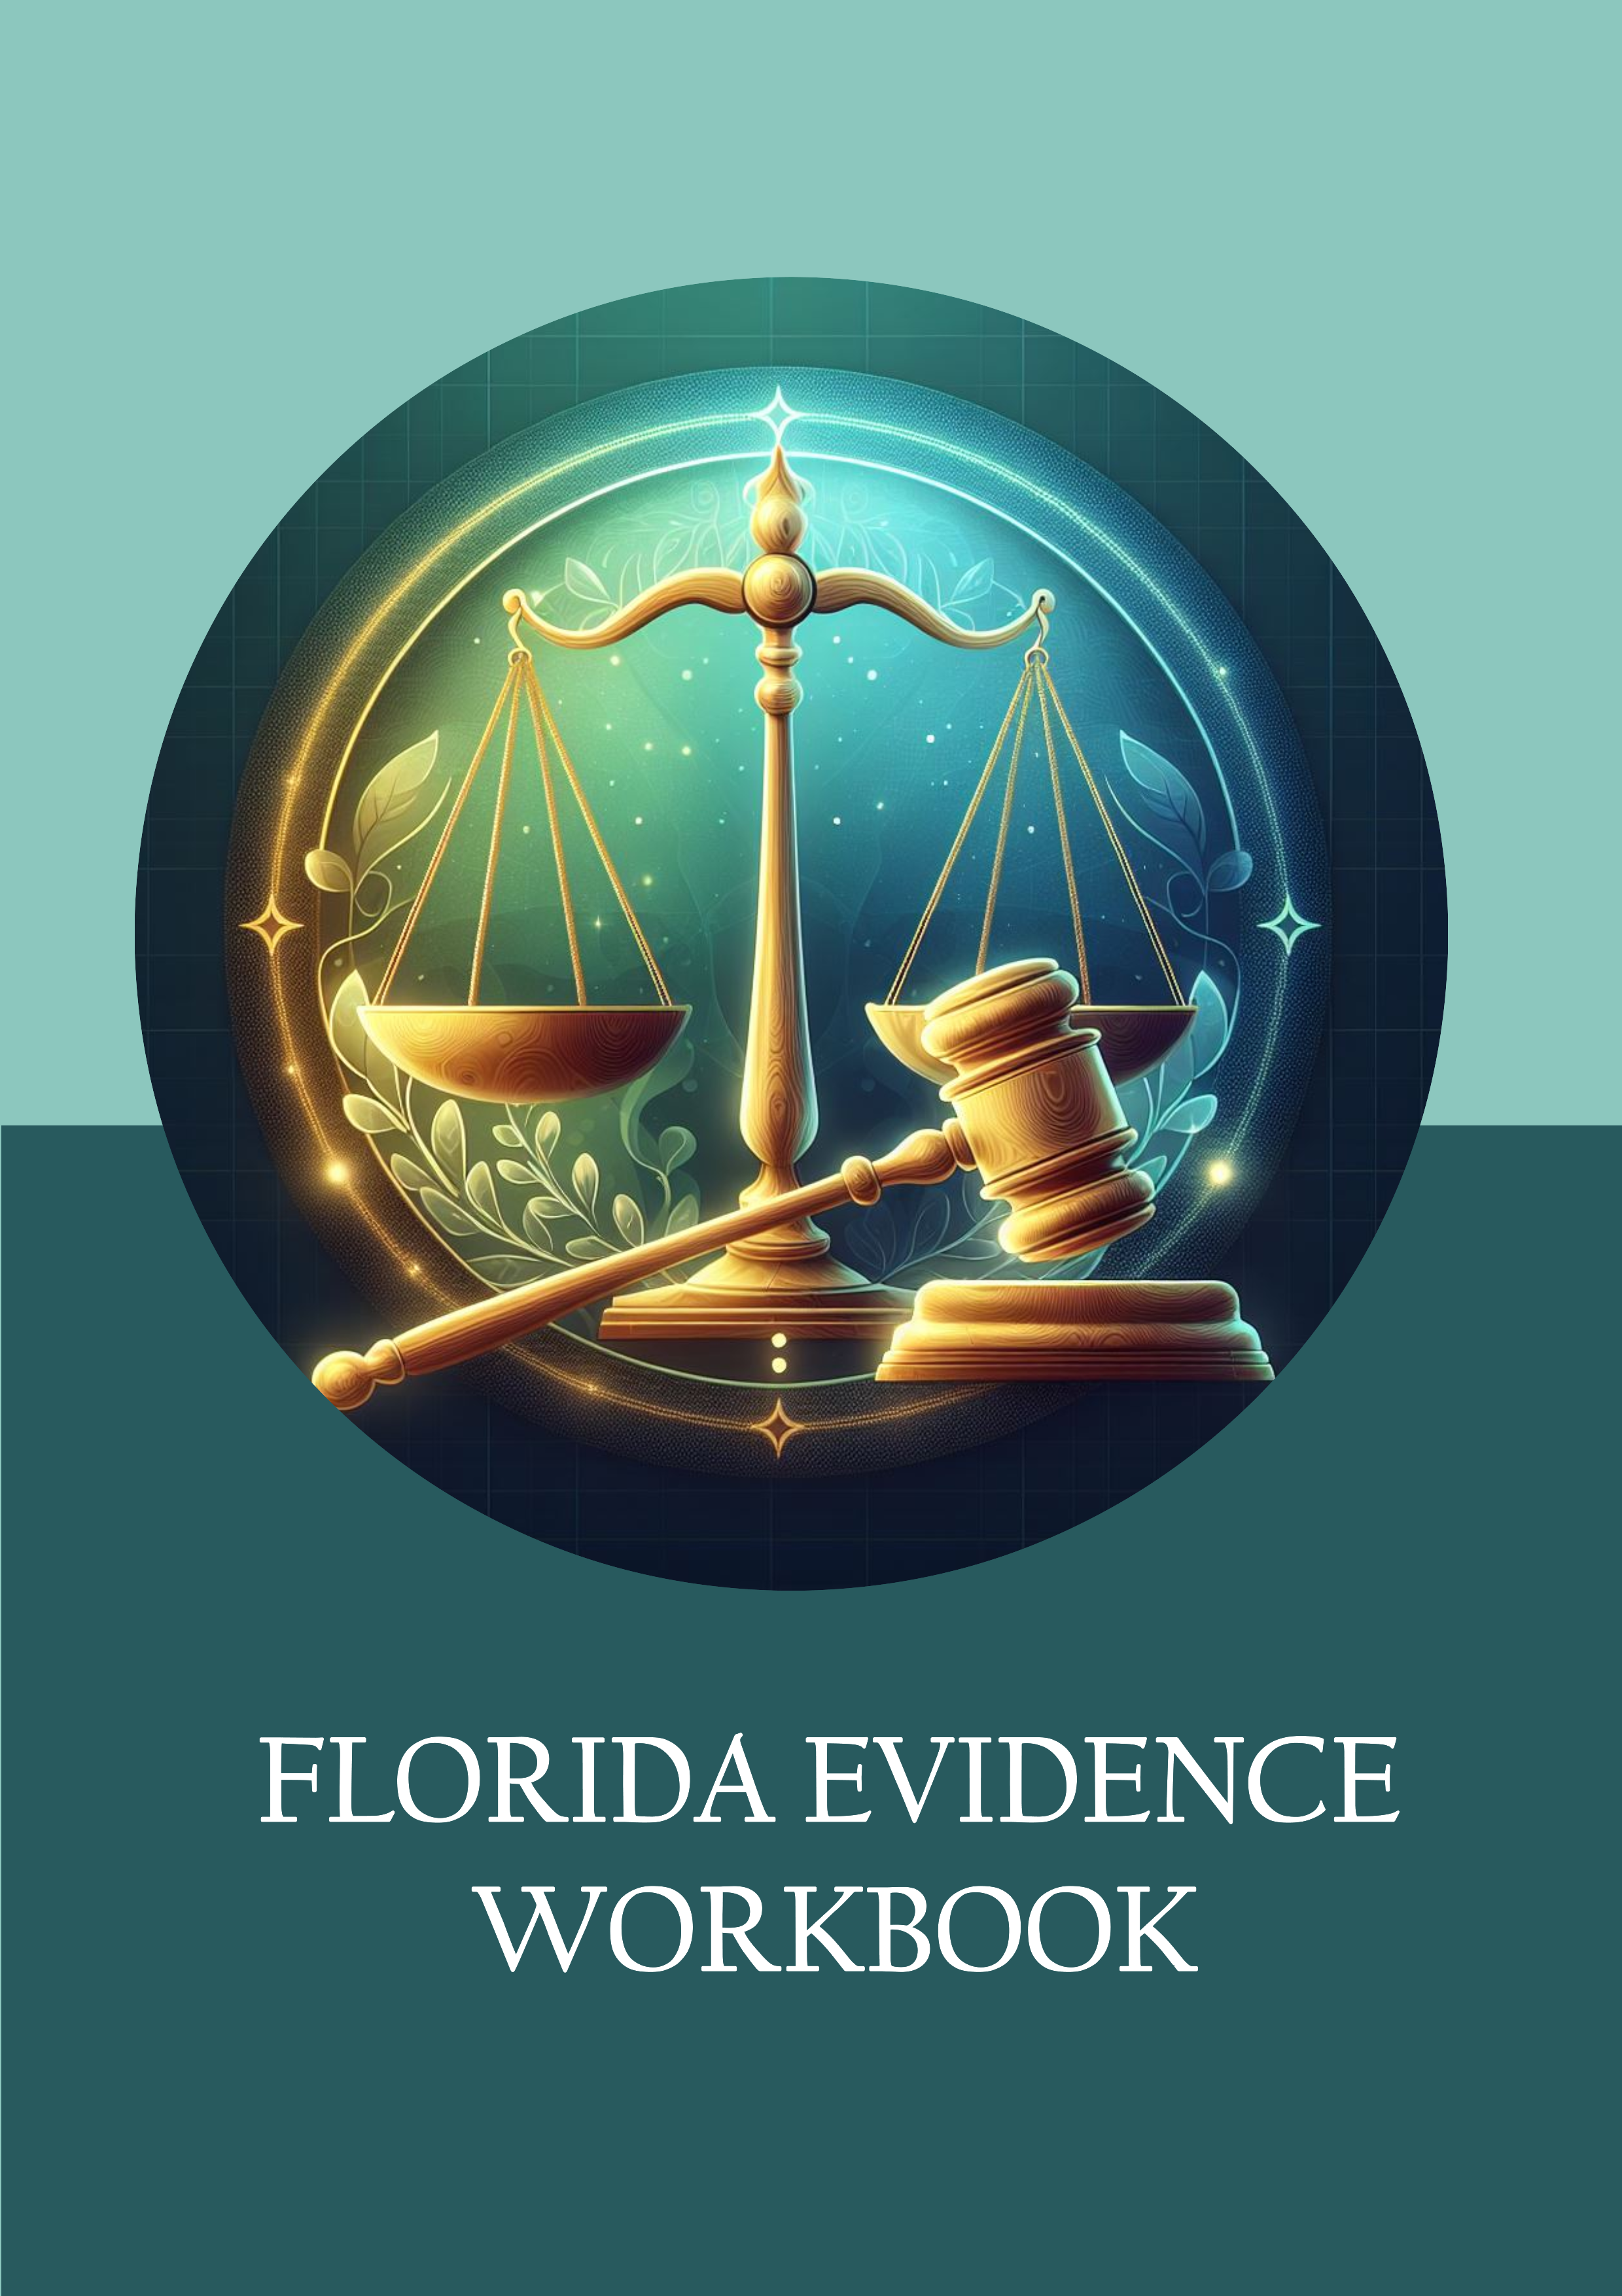 FL EVIDENCE STUDY EBOOK WORKBOOK